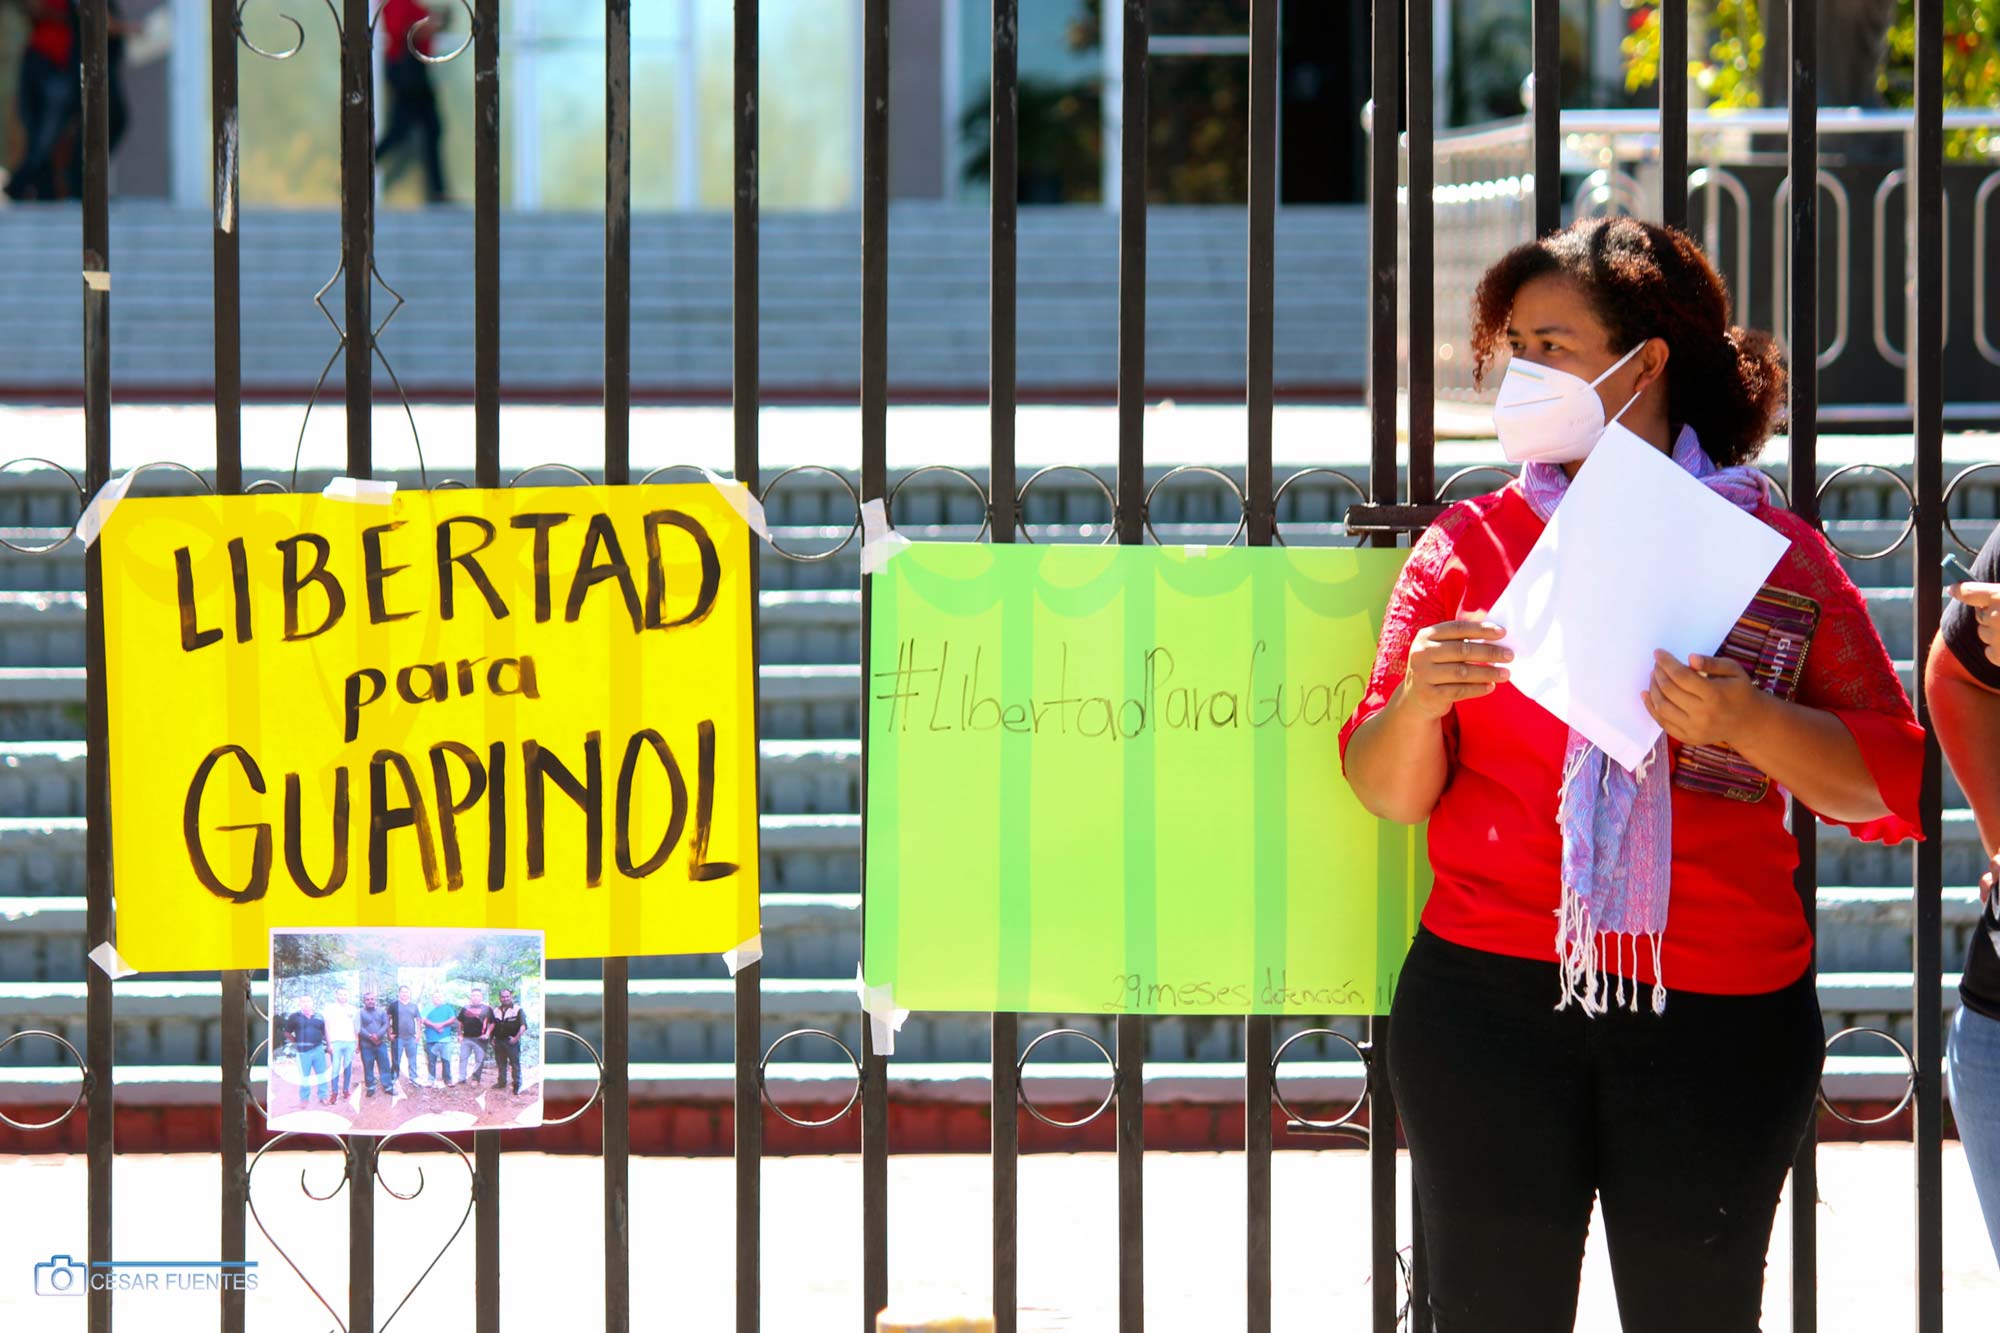 Woman standing next to a fence and sign that says Libertad para Guapinol and #LibertadPara Guapinol